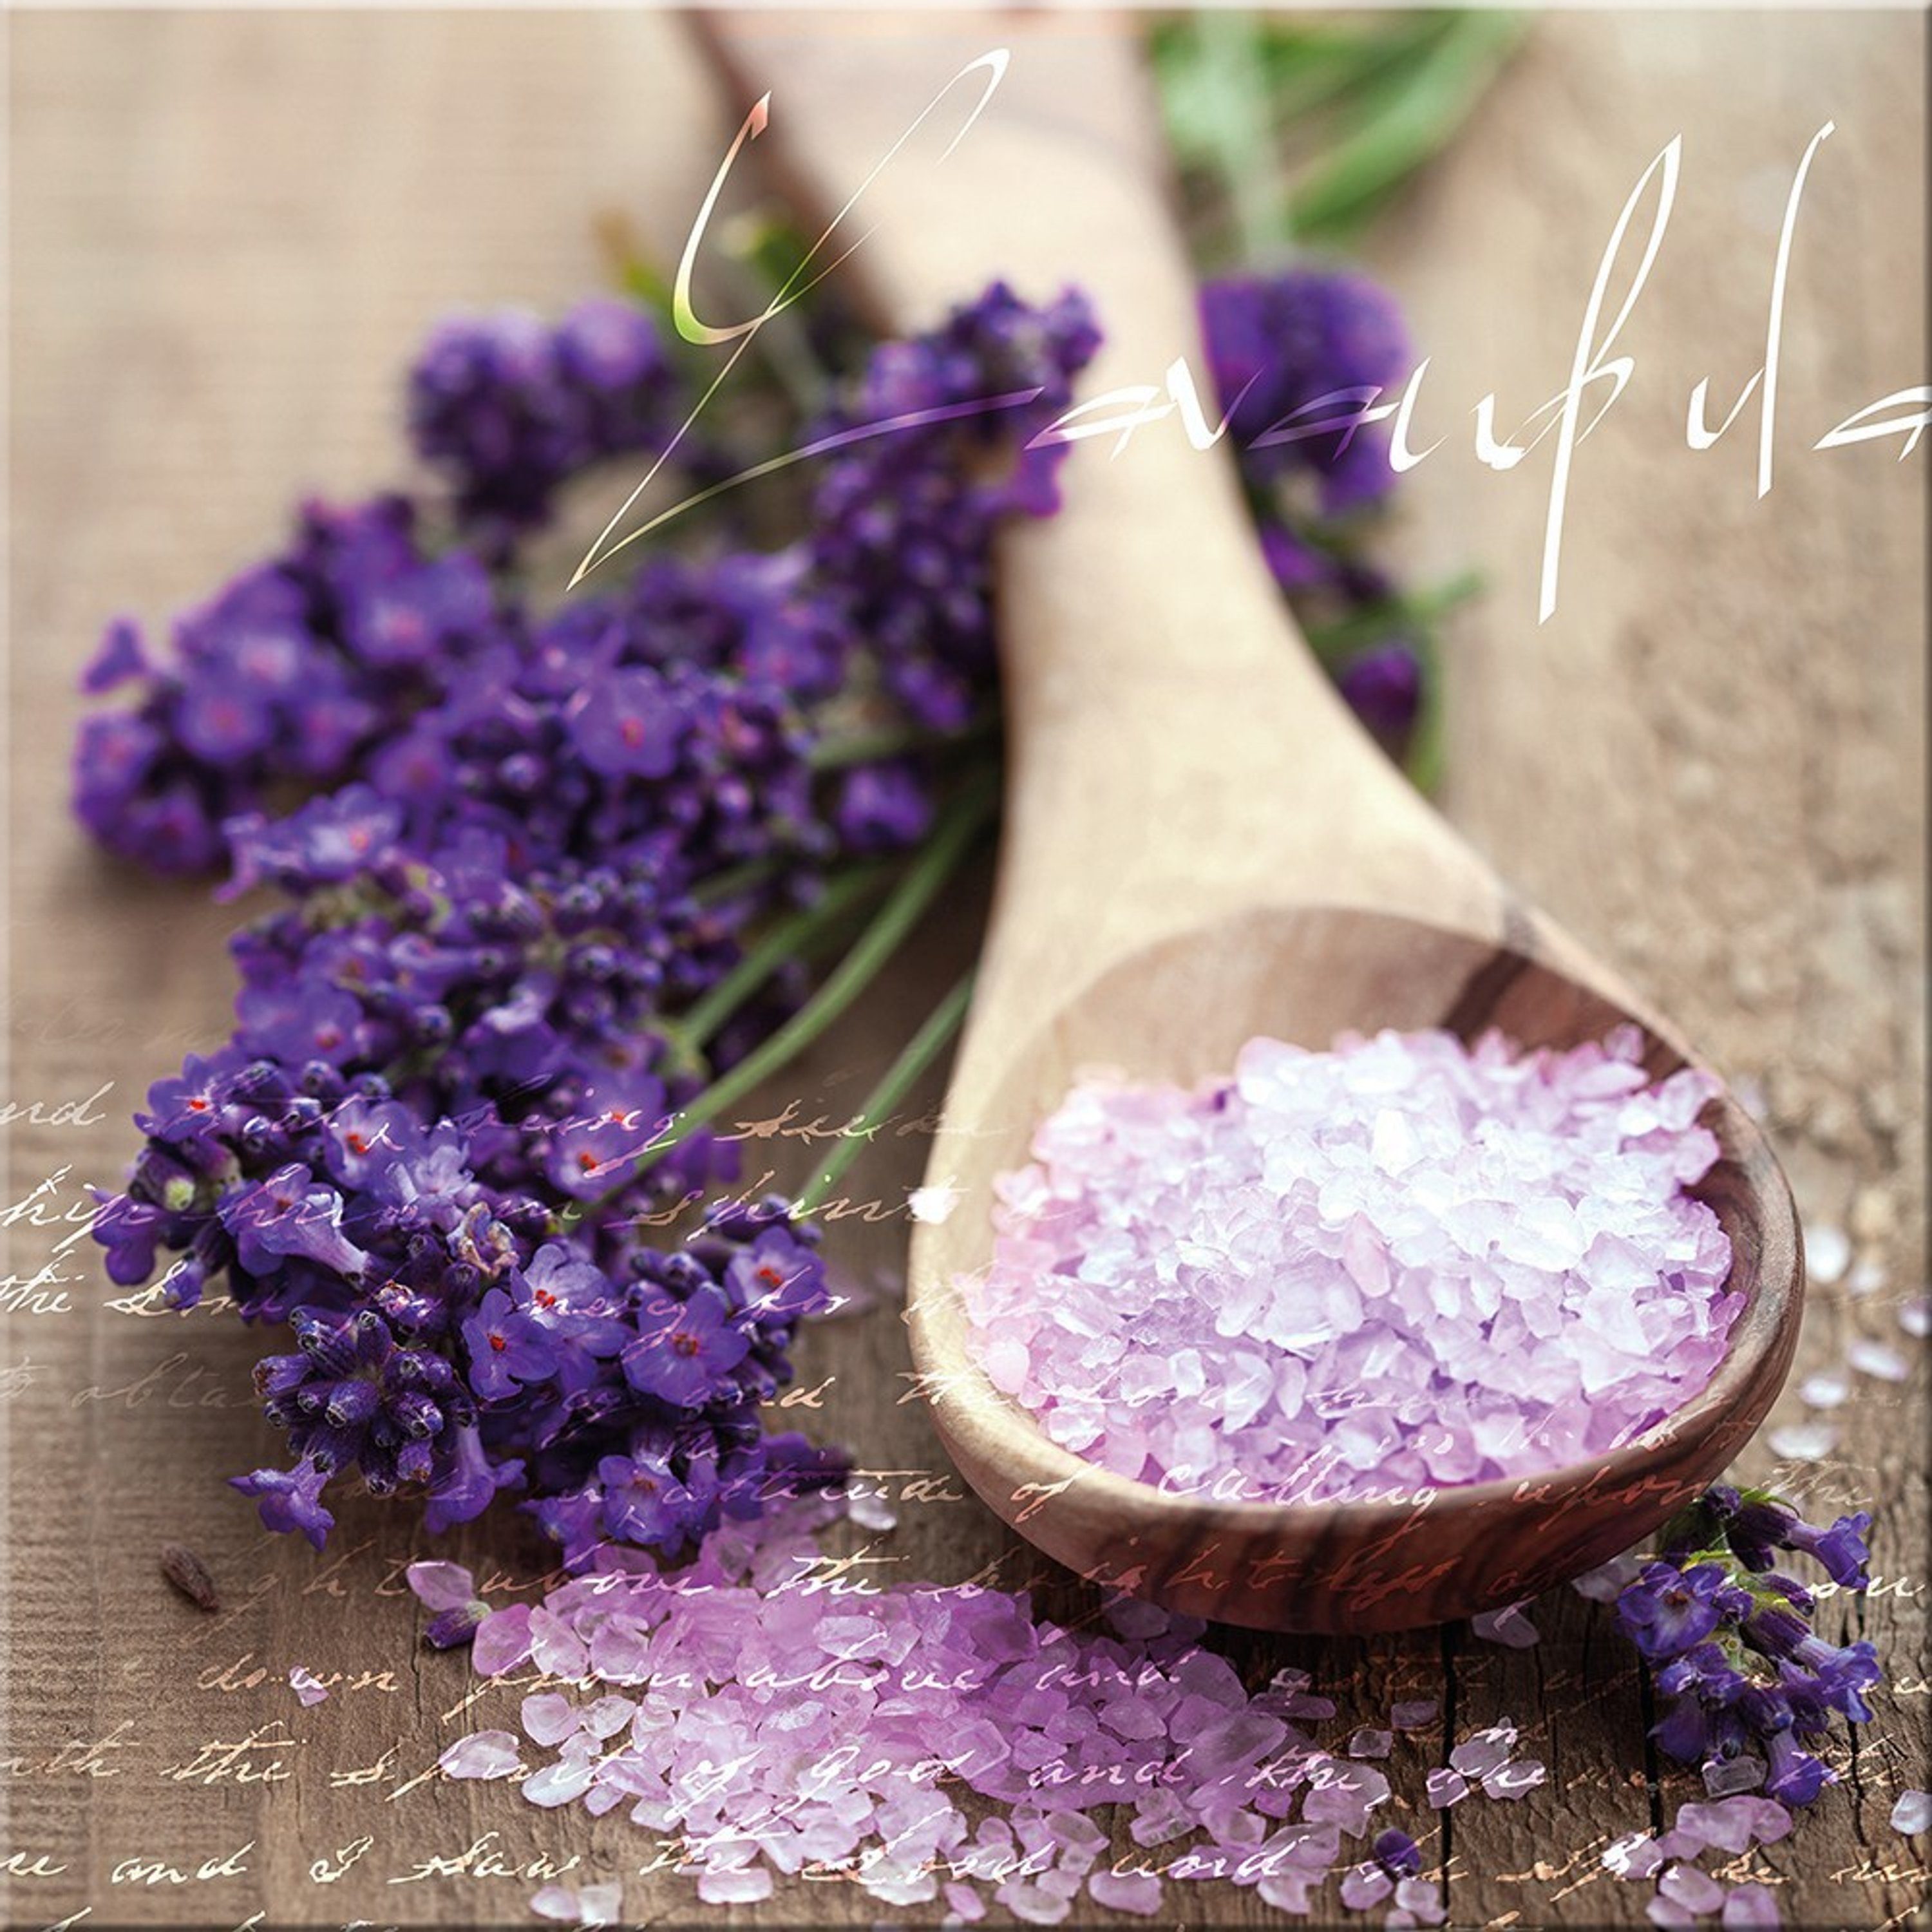 Lavendel Lavendel Spa: Blumen lila, artissimo Bild 30x30cm Glasbild Glasbild Wellness